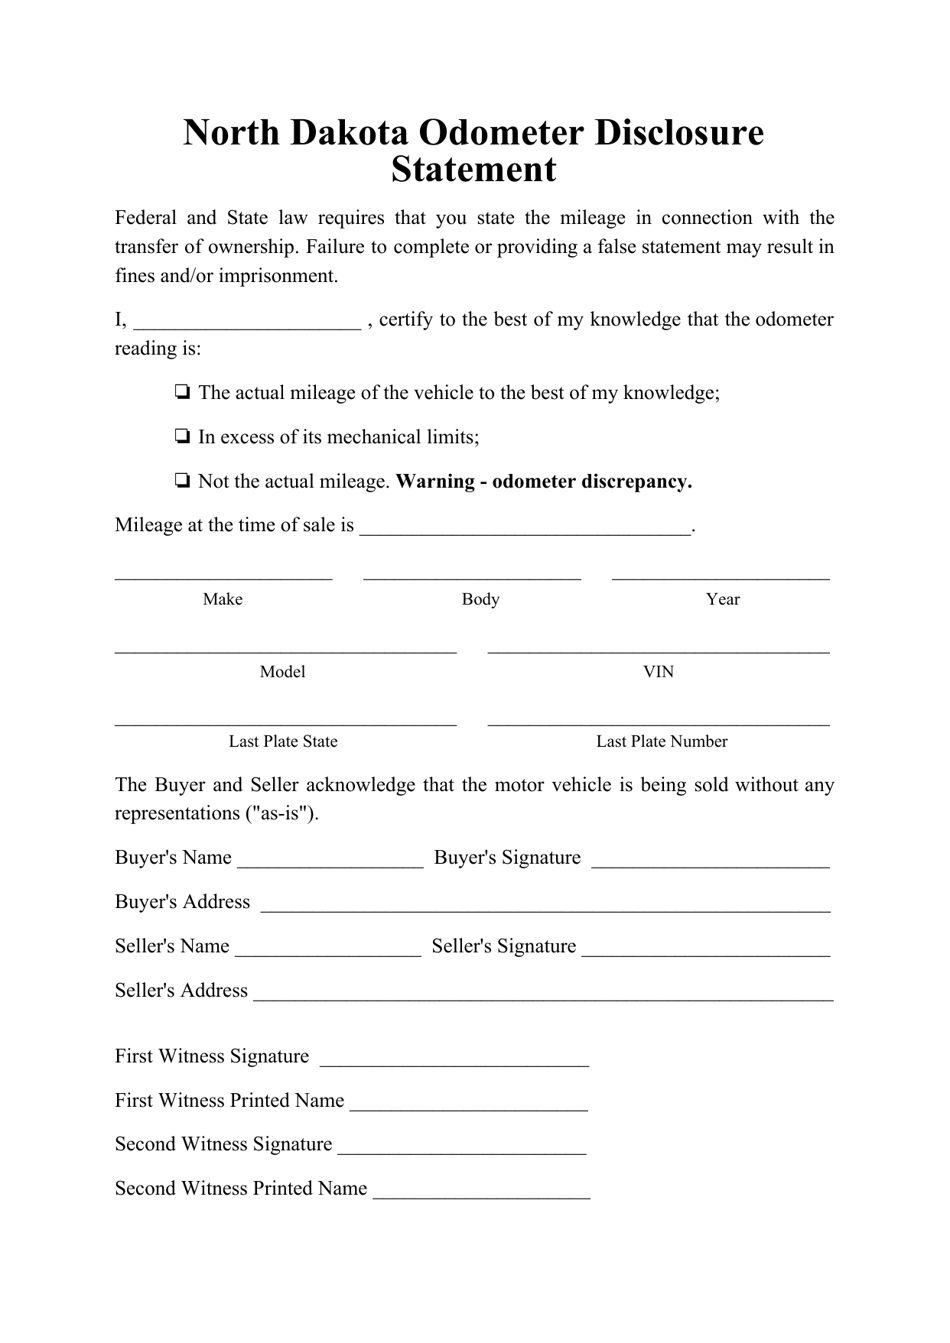 Odometer Disclosure Statement Form - North Dakota, Page 1